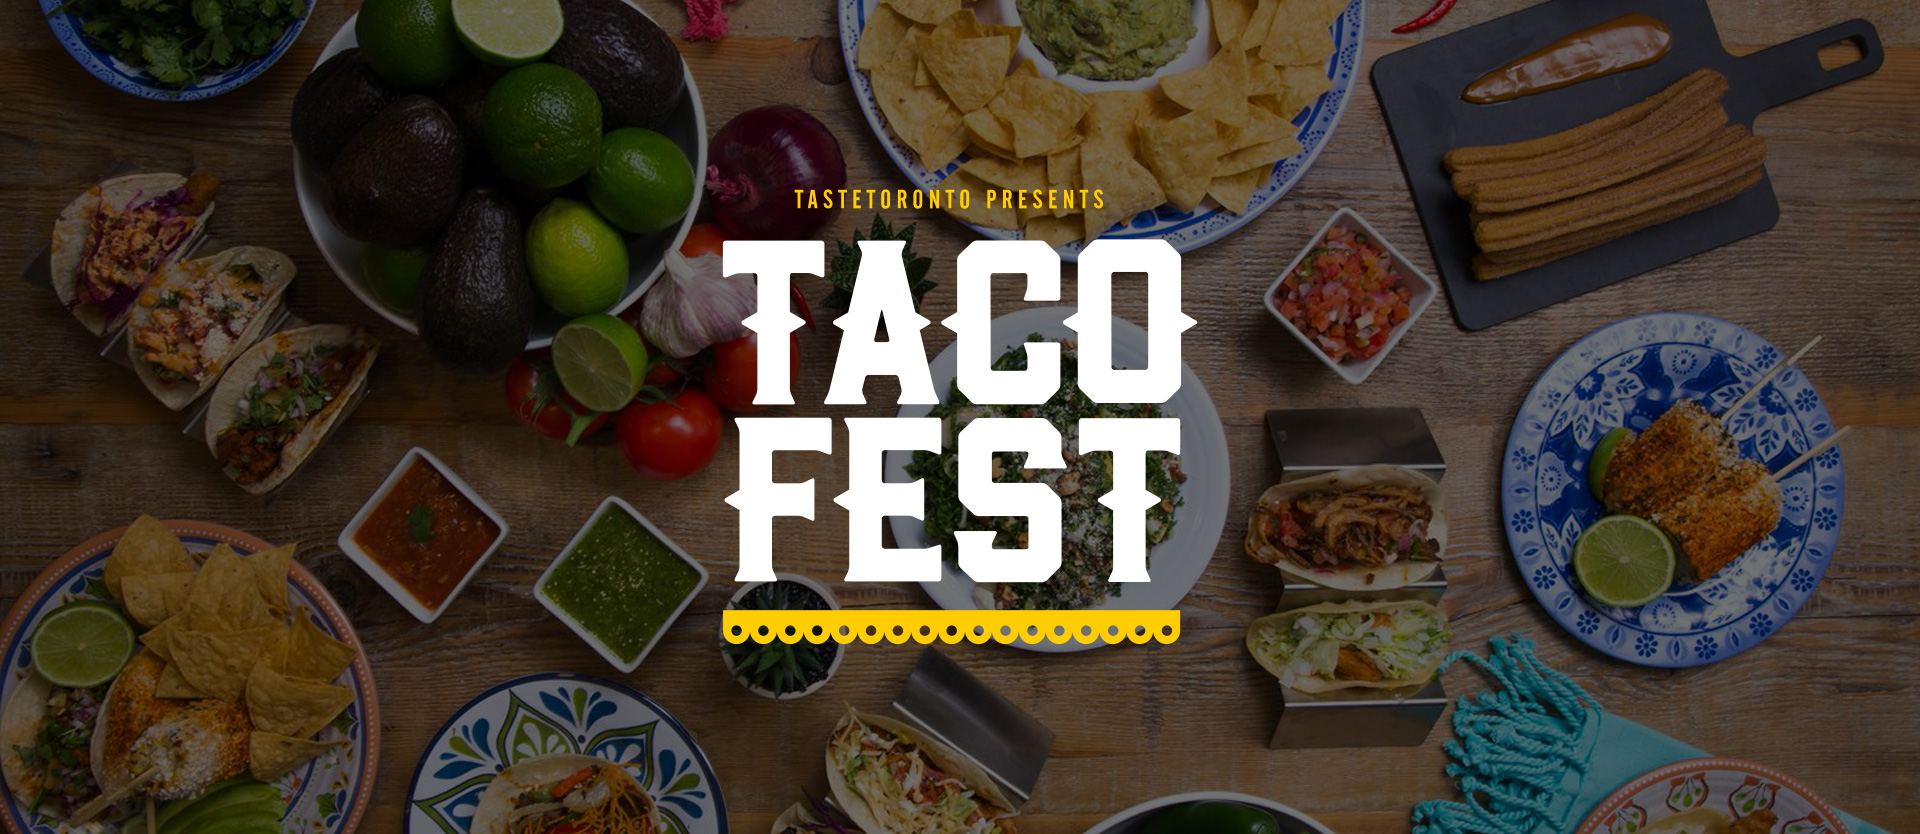 Taco Fest